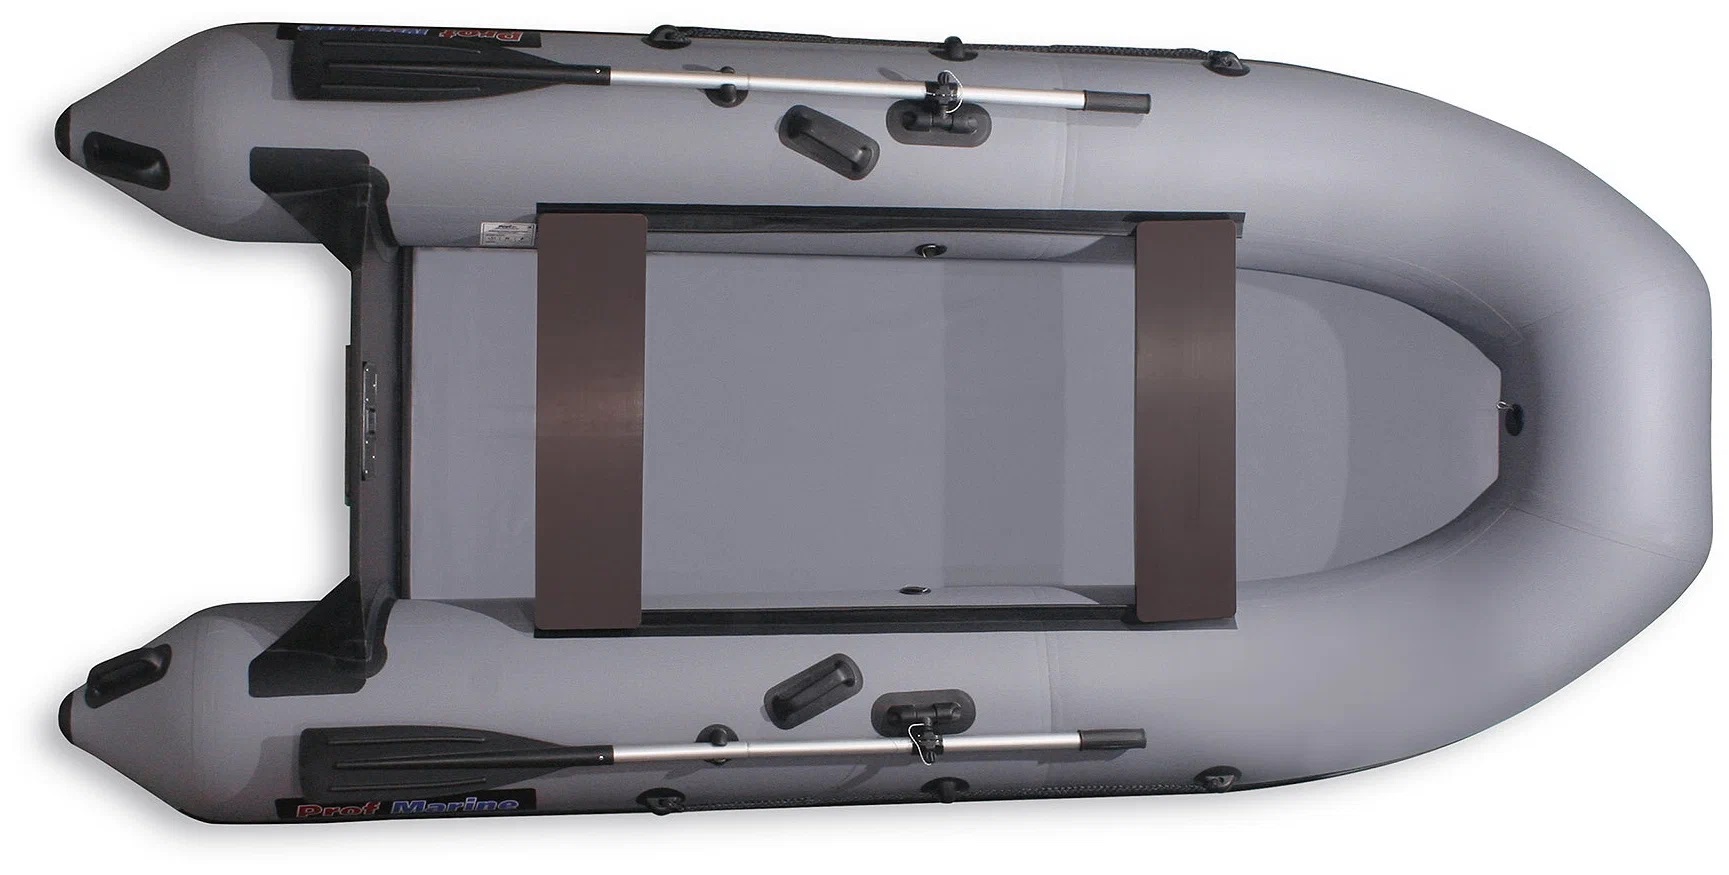 Лодка надувная ПВХ PM 320 L, моторно-гребная, плоскодонная